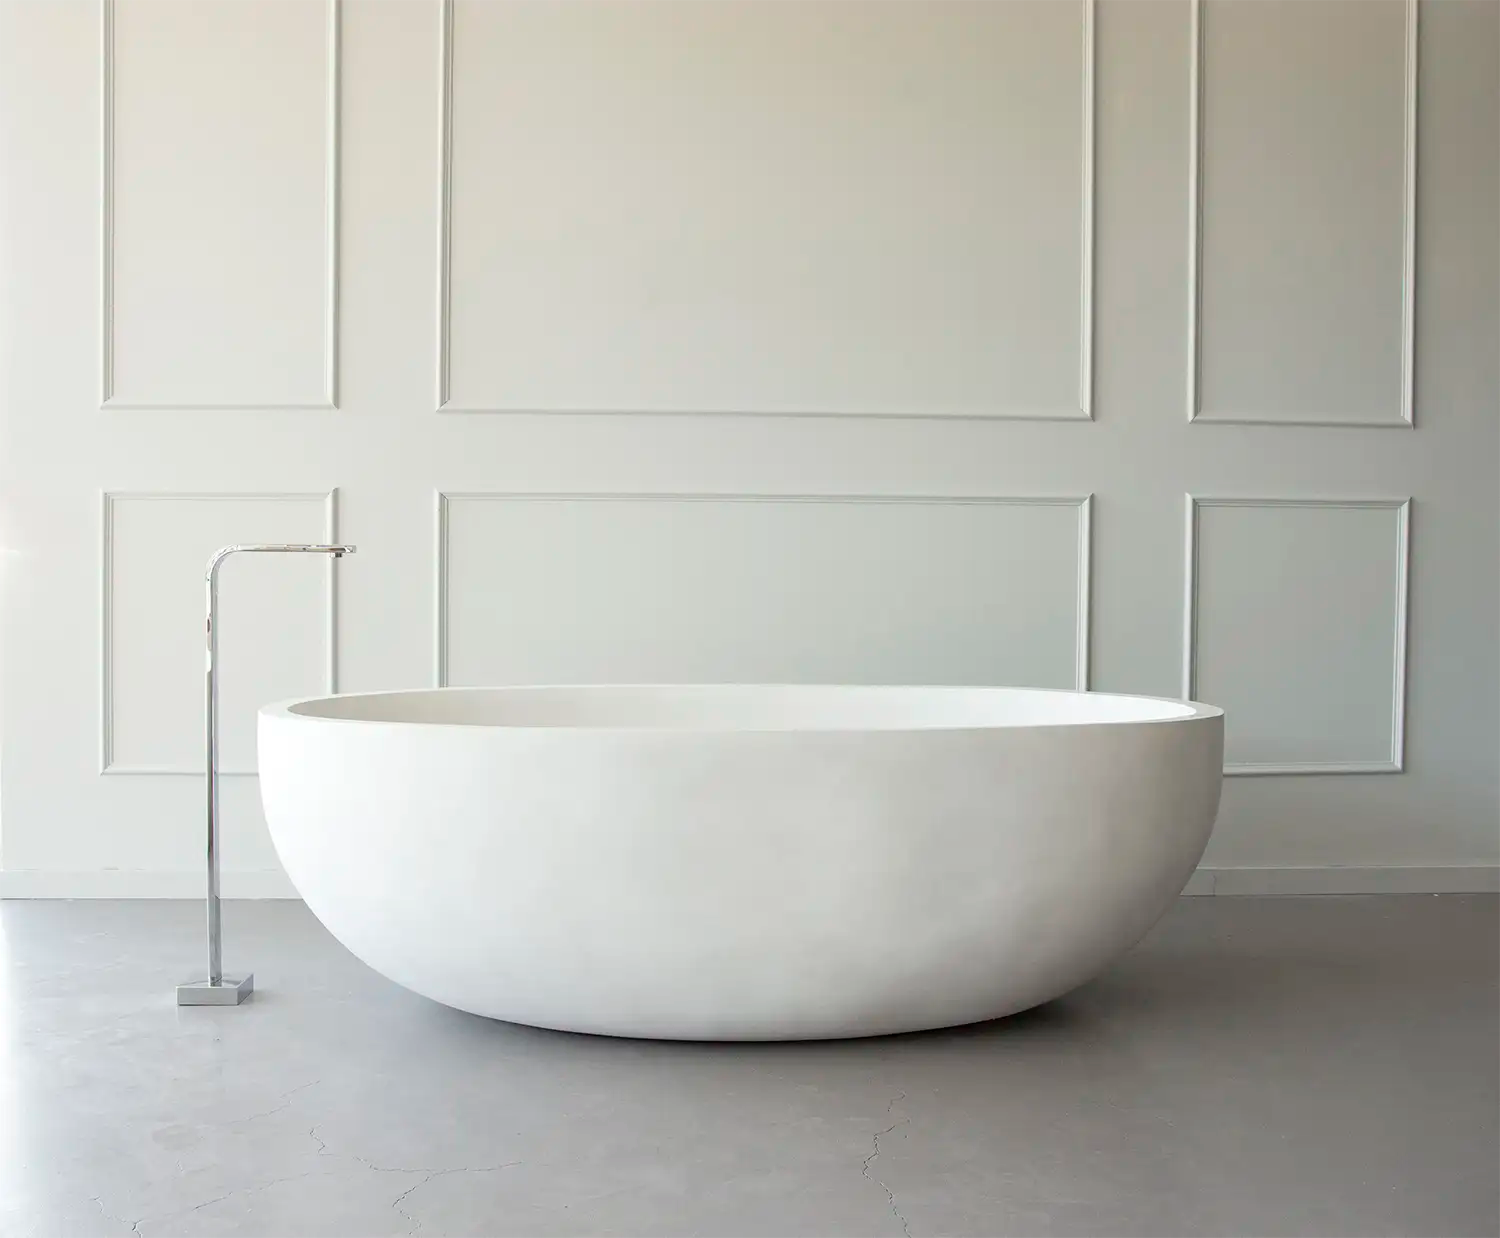 Rubens Stone Composite Bath